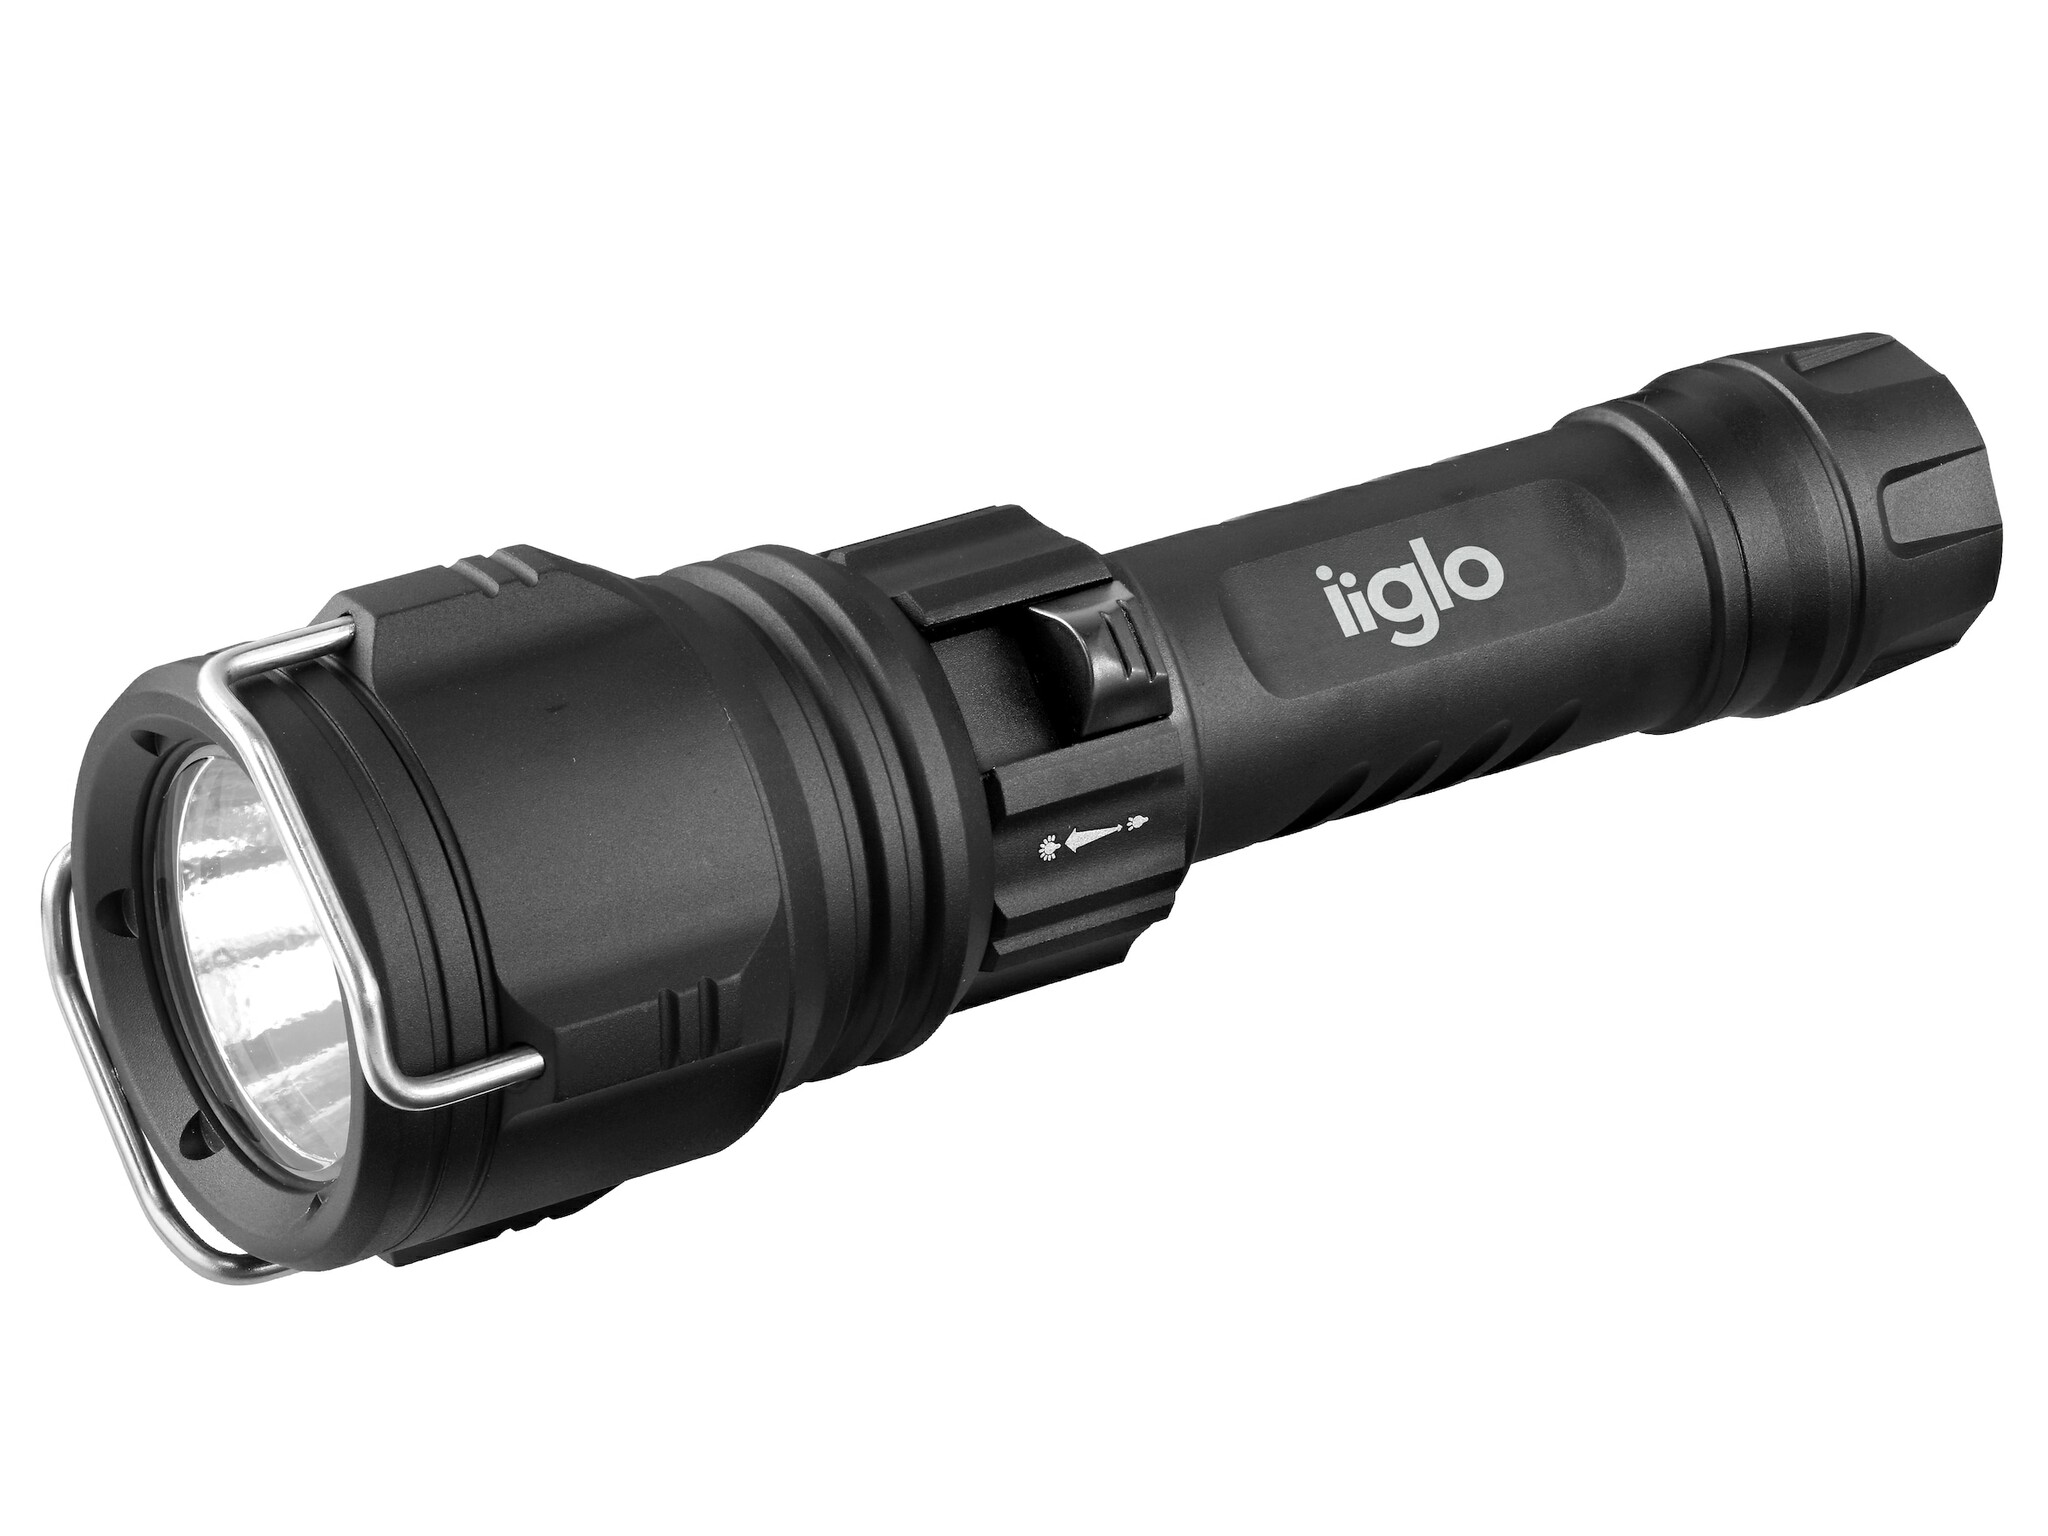 iiglo Ficklampa 1000 Lumen uppladdningsbart li-on Batteri, IPX6